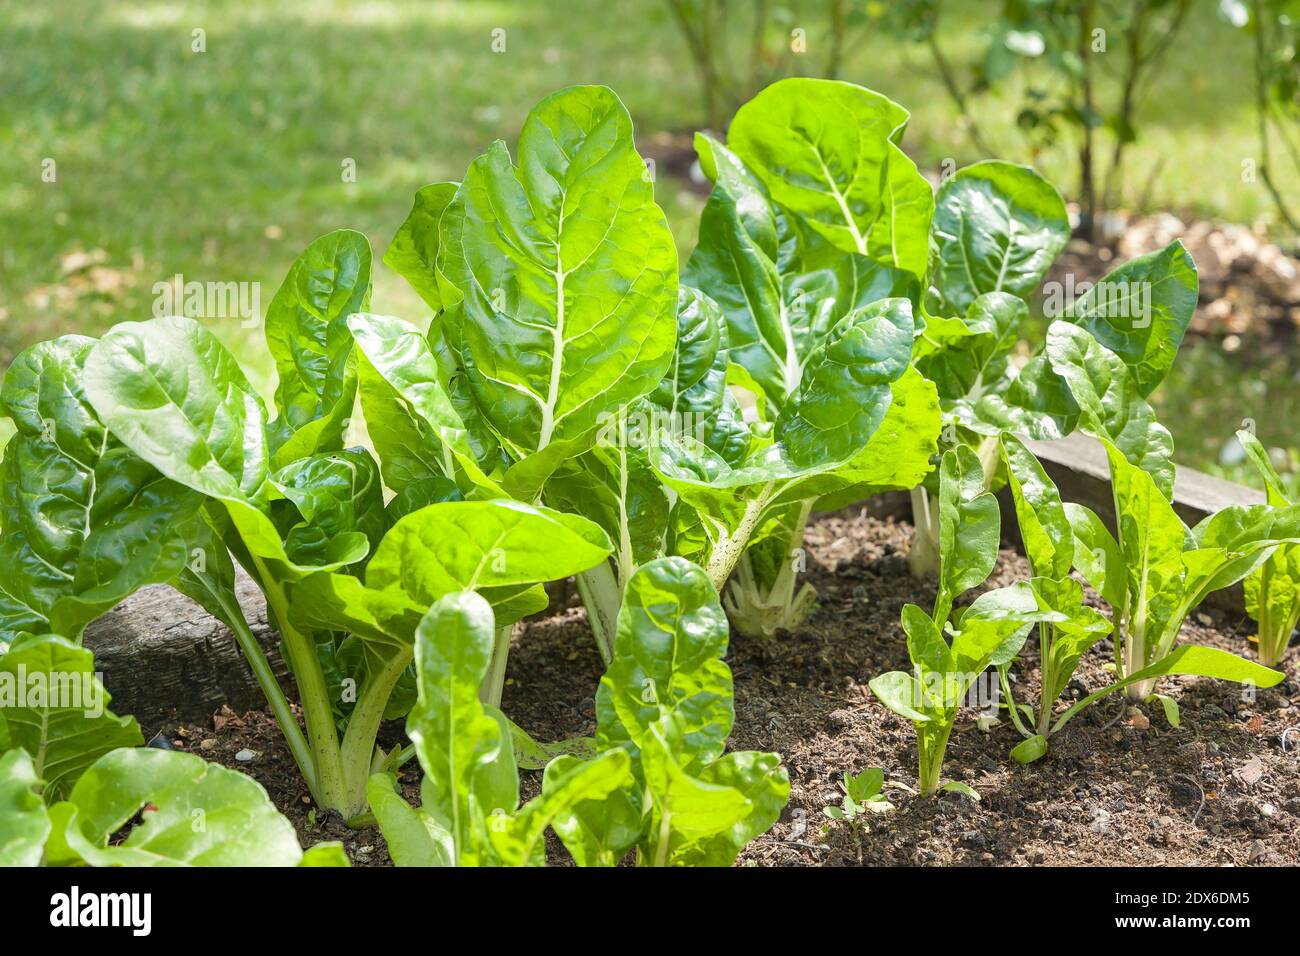 Swiss chard or leaf beet plant (beta vulgaris), leafy green vegetable growing in a UK garden in June Stock Photo